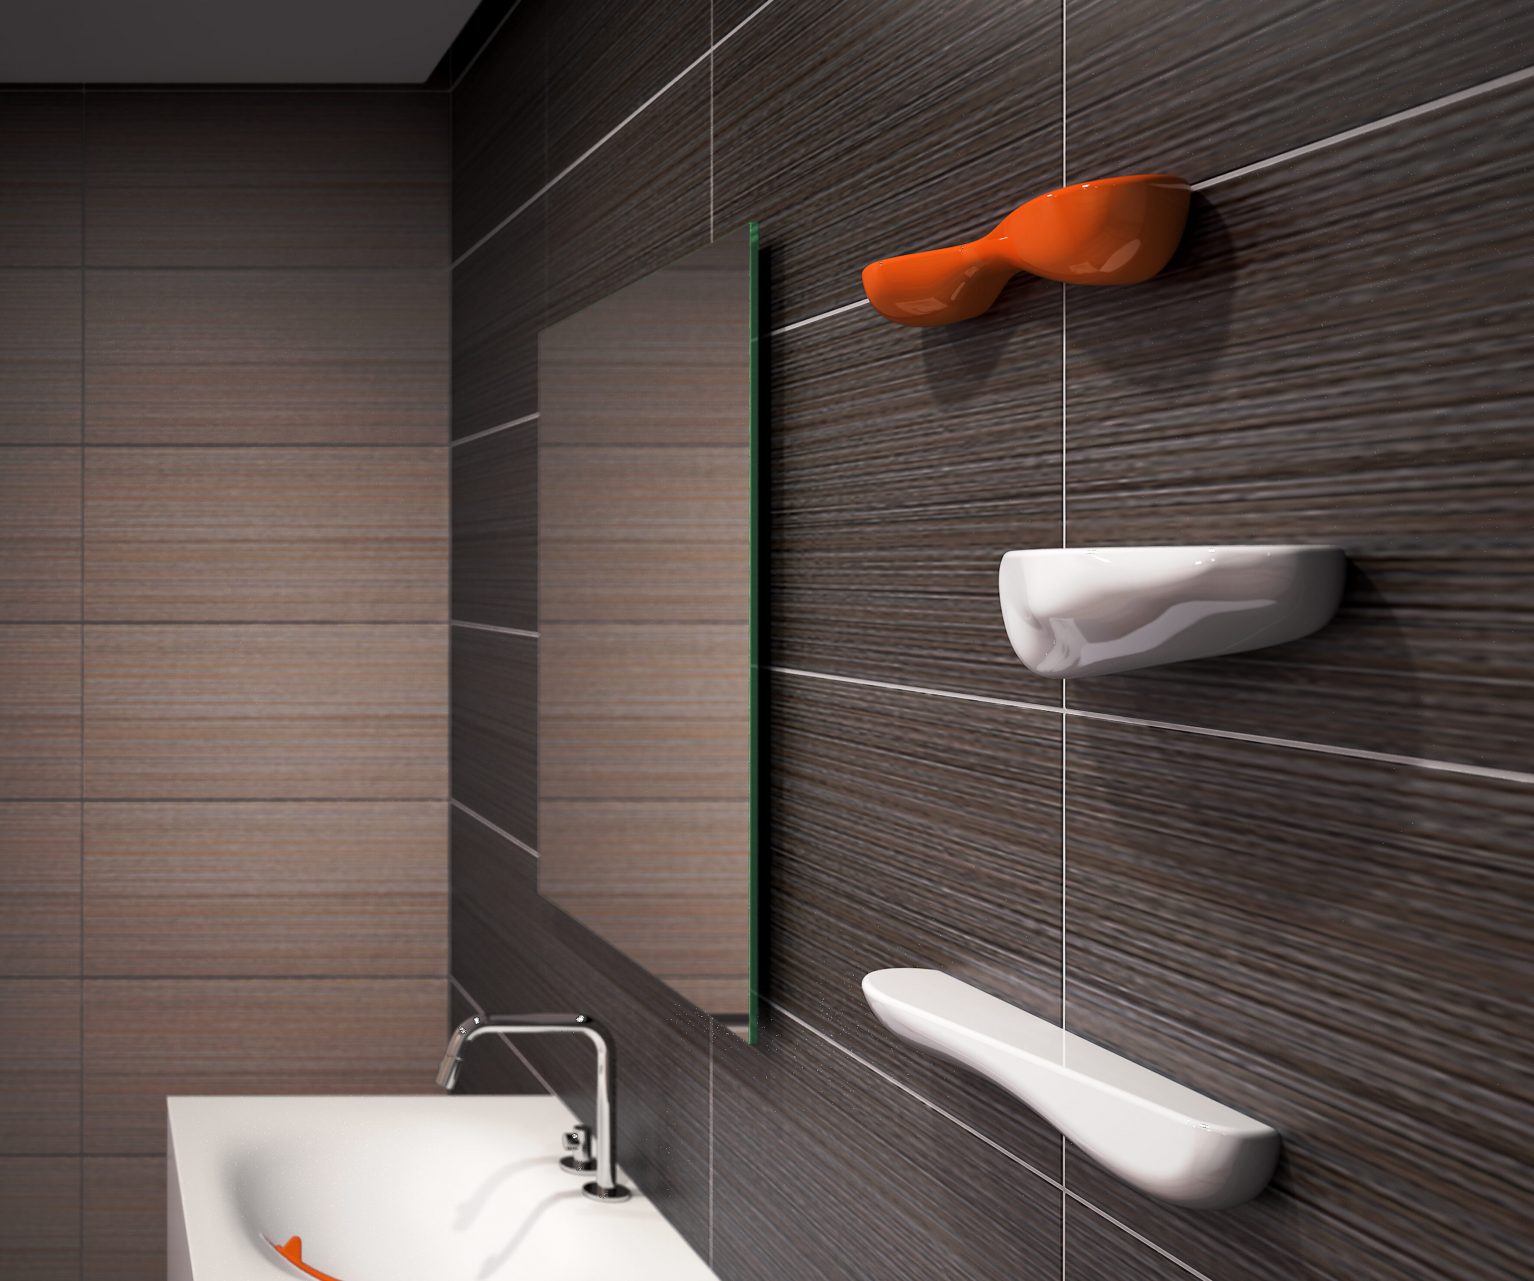 planchet-accessoires-wit-oranje-keramiek-toilet-badkamer-luxe-sanitair-Cliff-clou-klein-plankje-planchetje-Sp-shadow-wastafel